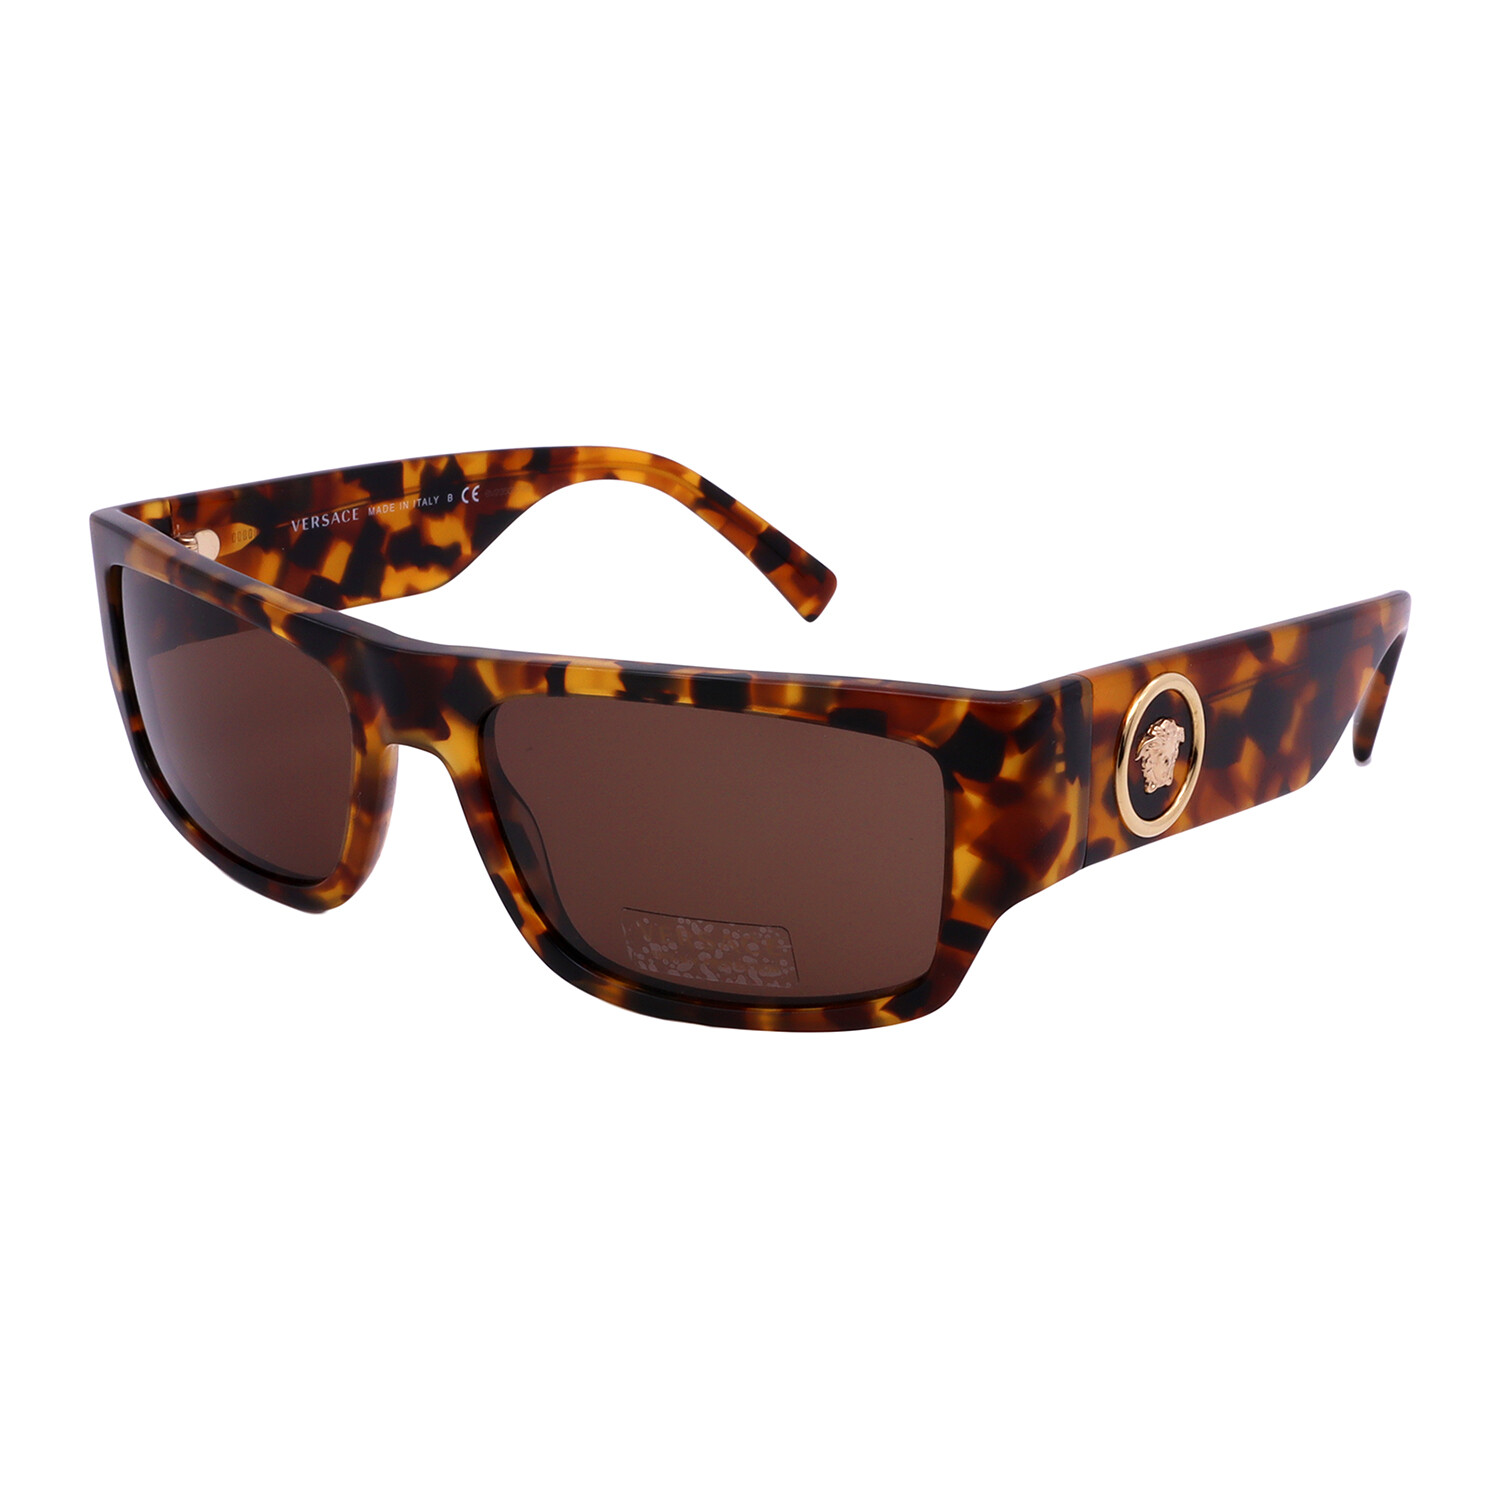 Versace // Men's VE4385-511973 Square Sunglasses // Havana Brown ...